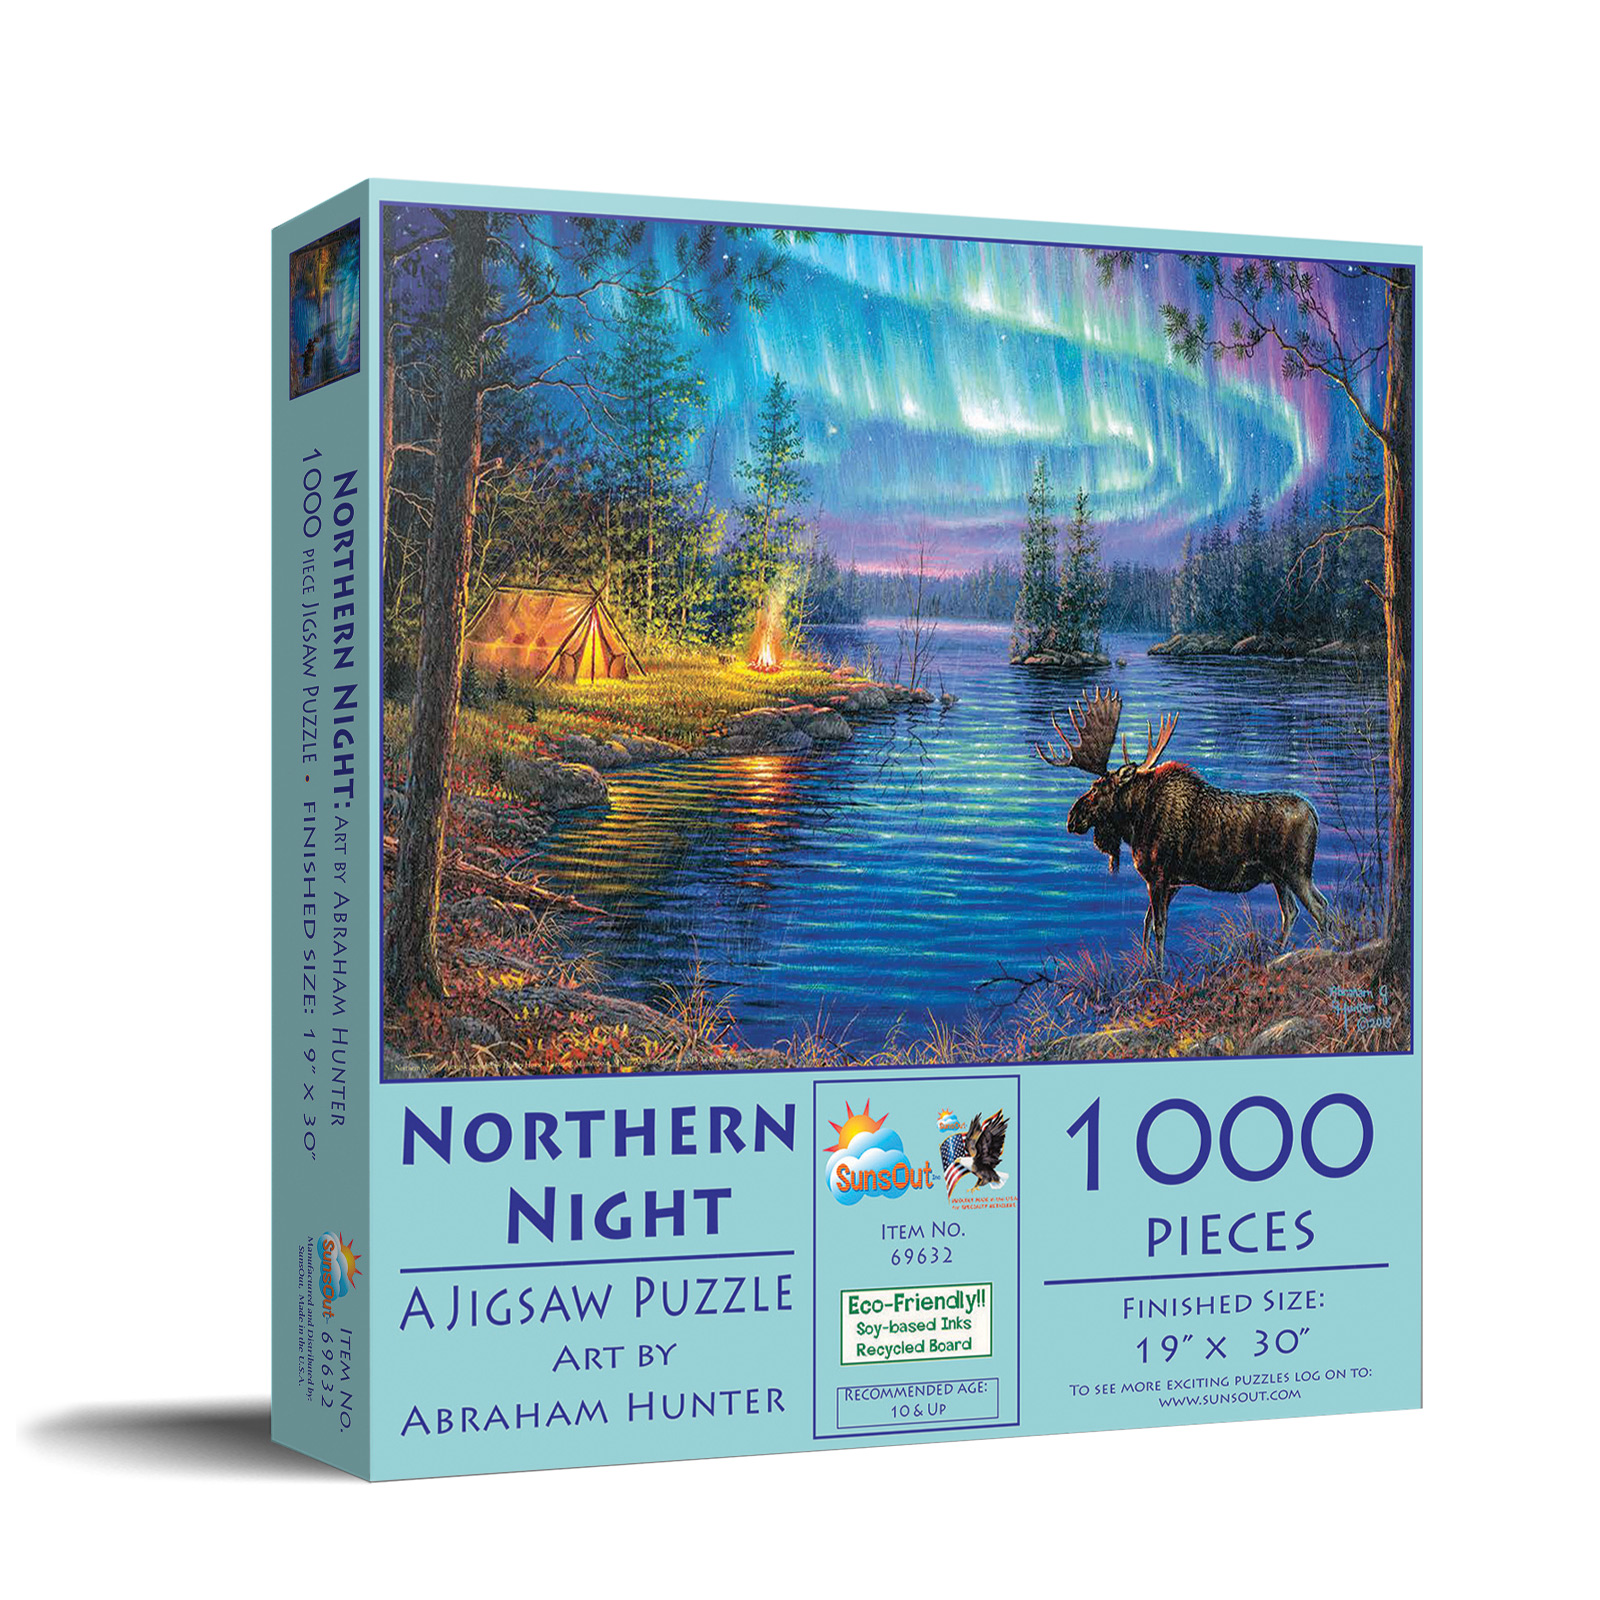 Northern Night